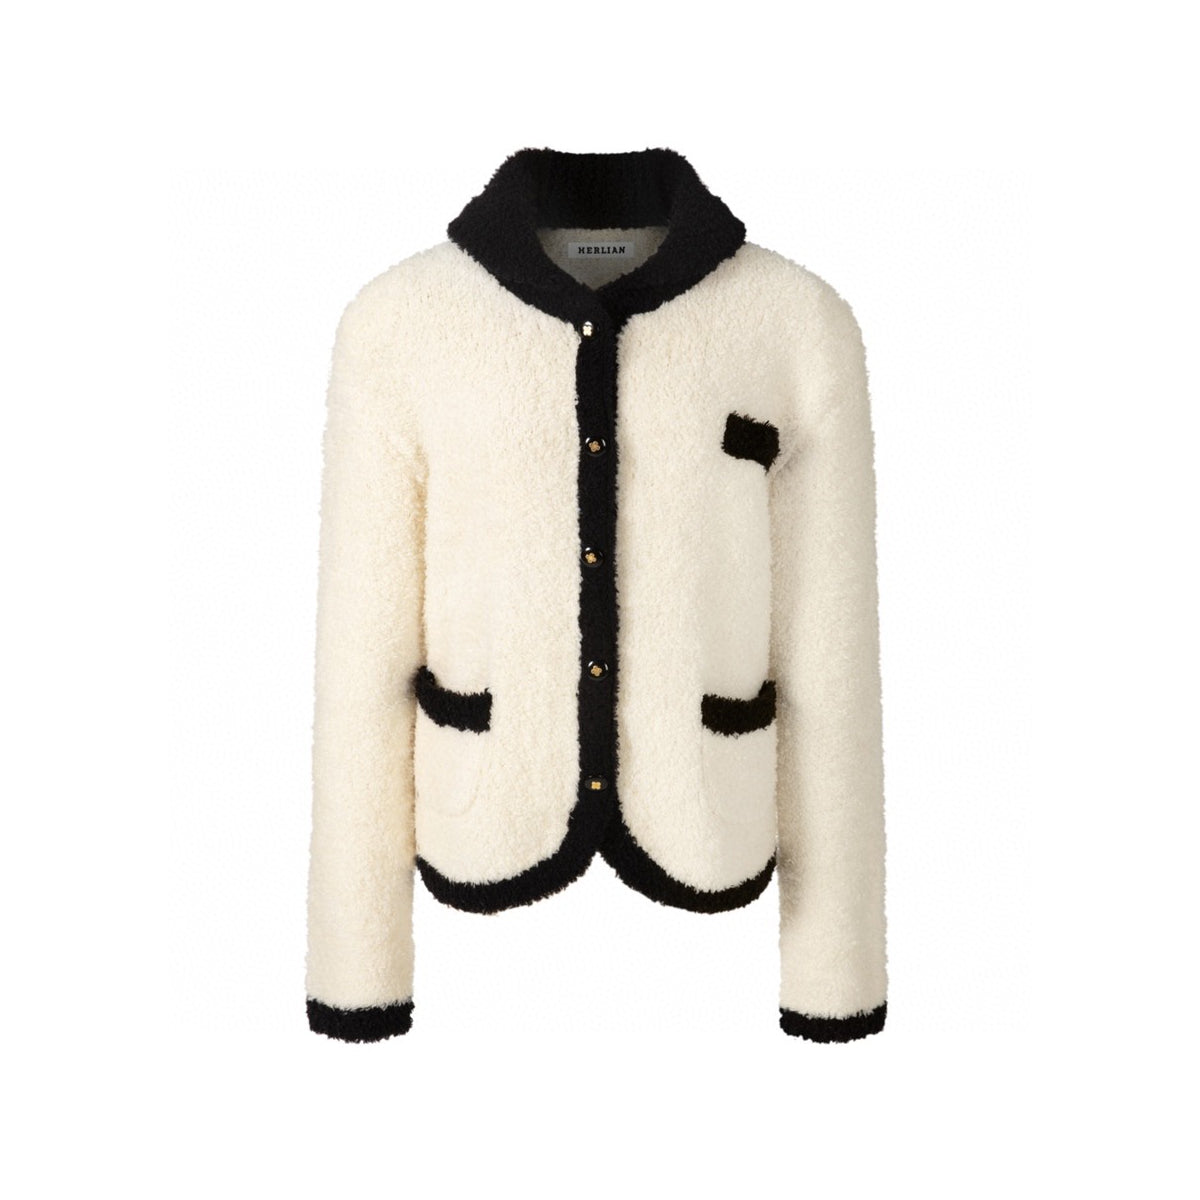 Herlian Color Blocked Oversize Fur Coat White